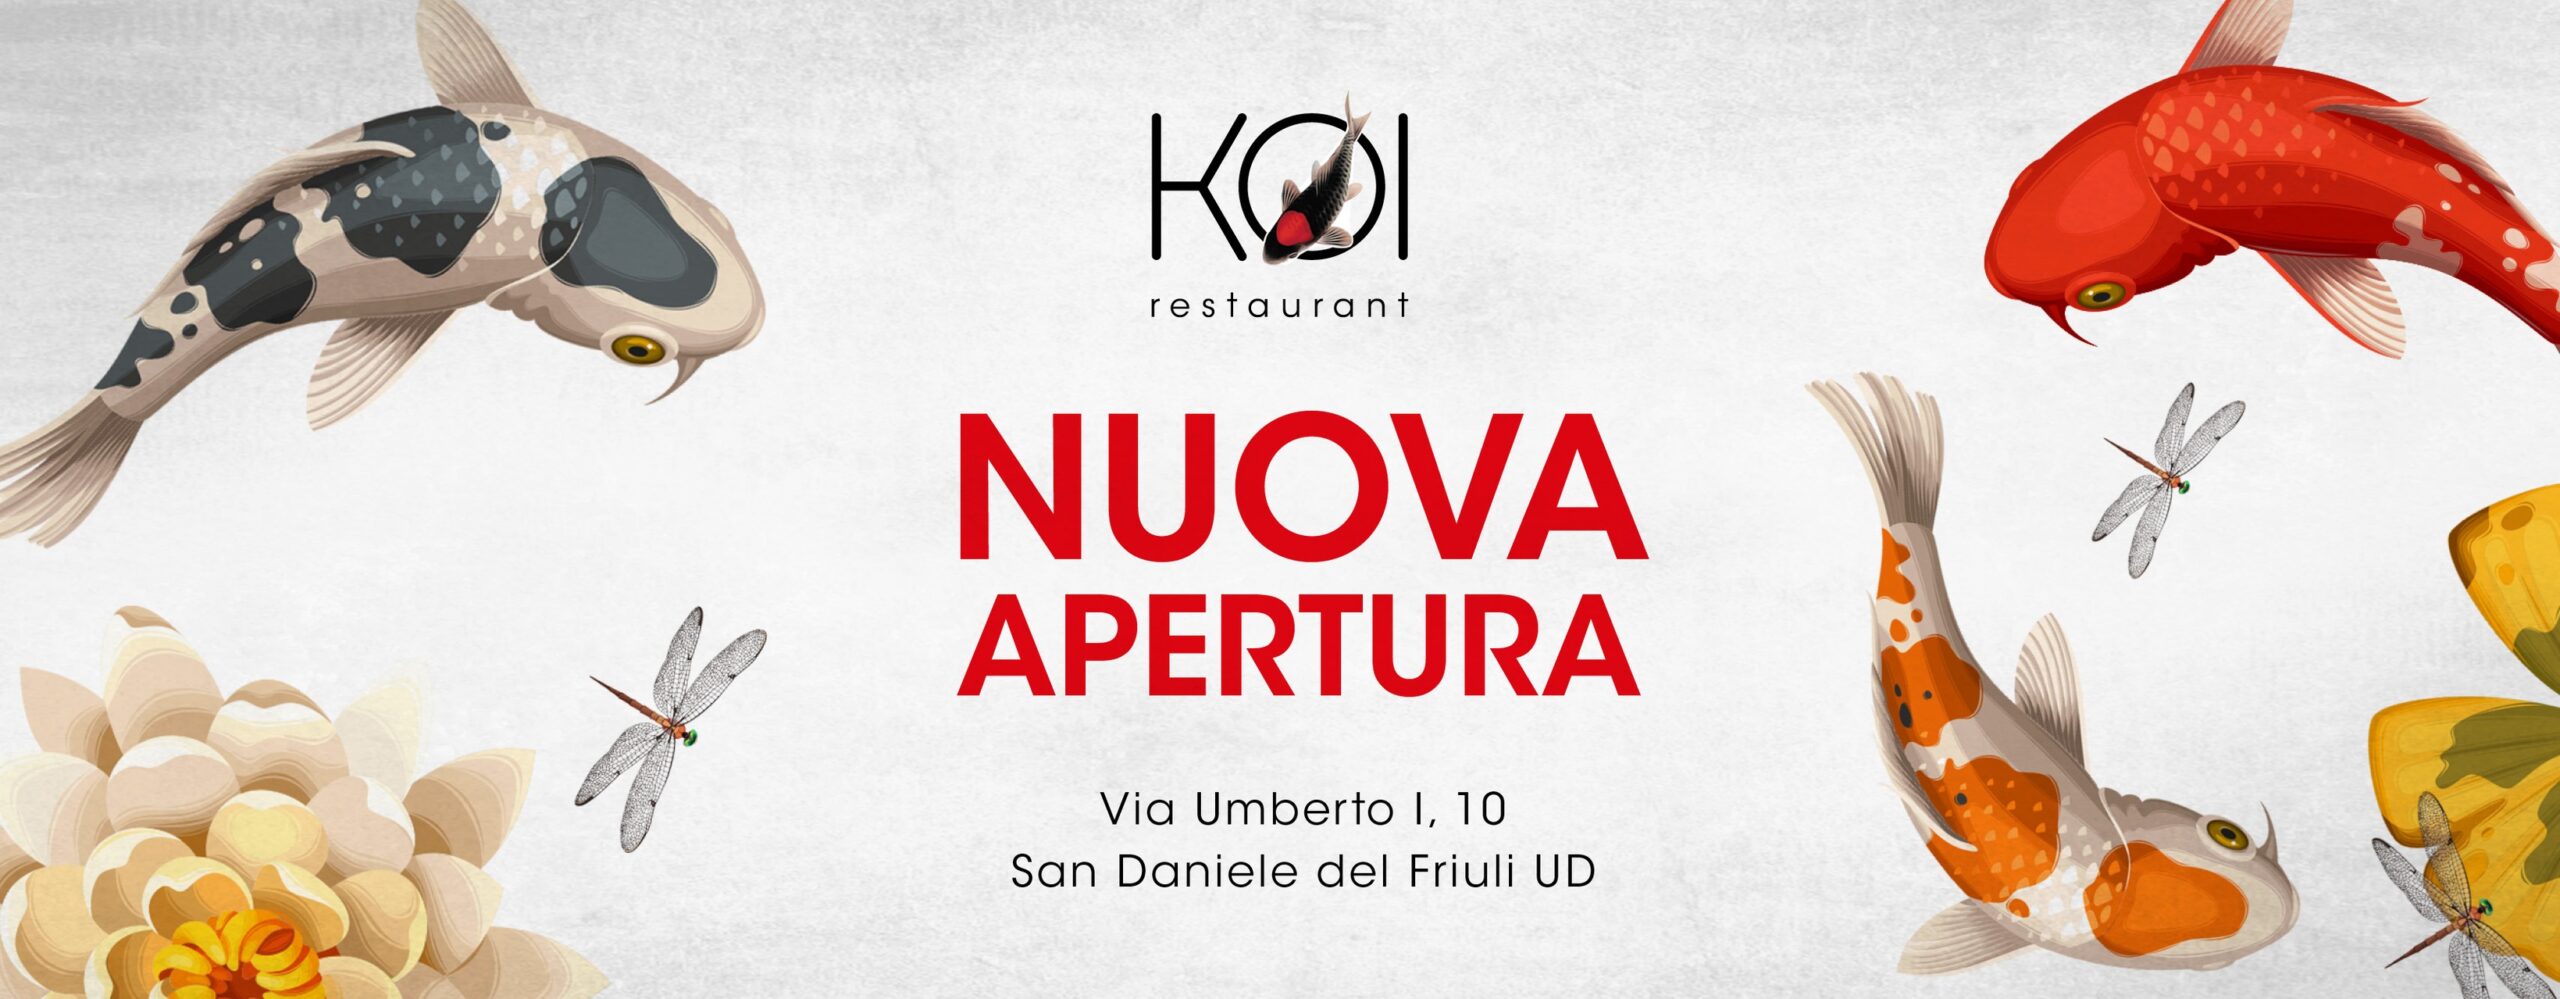 Koi Asian Restaurant arriva a San Daniele